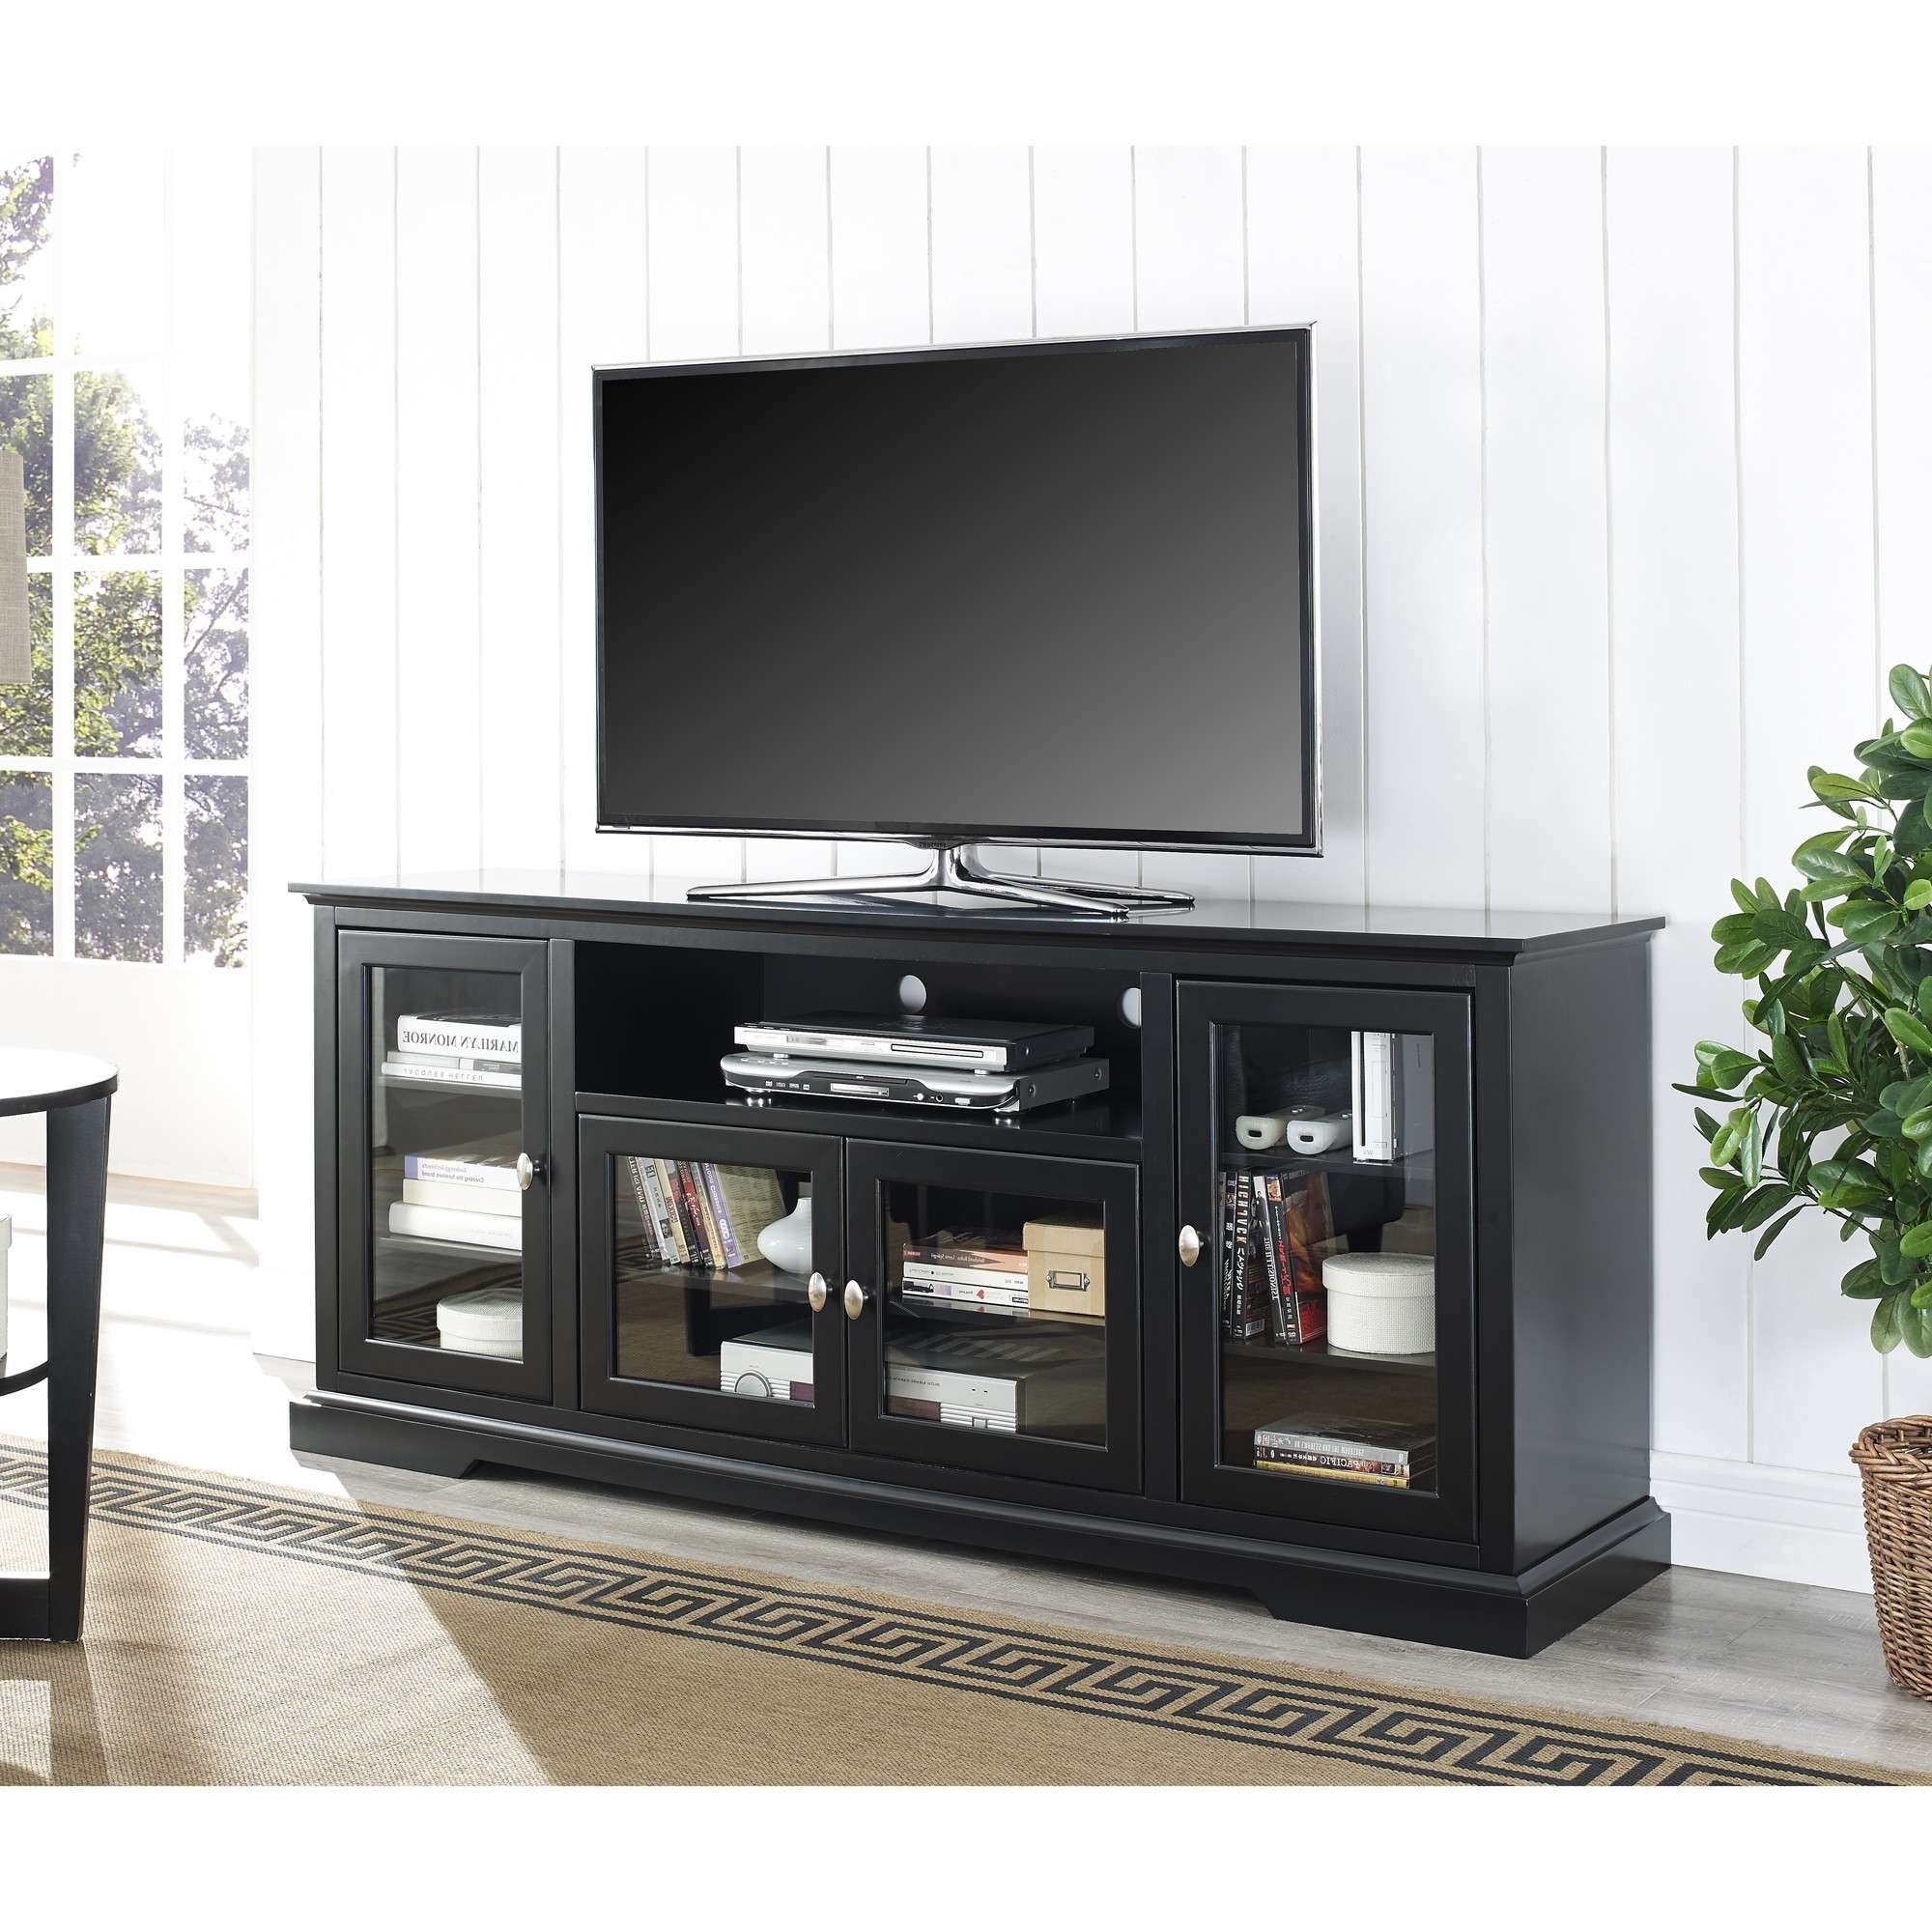 Sleek Doors Home Furniture Ideas Along With Doors Cabinet Image Regarding Black Tv Cabinets With Doors (View 9 of 20)